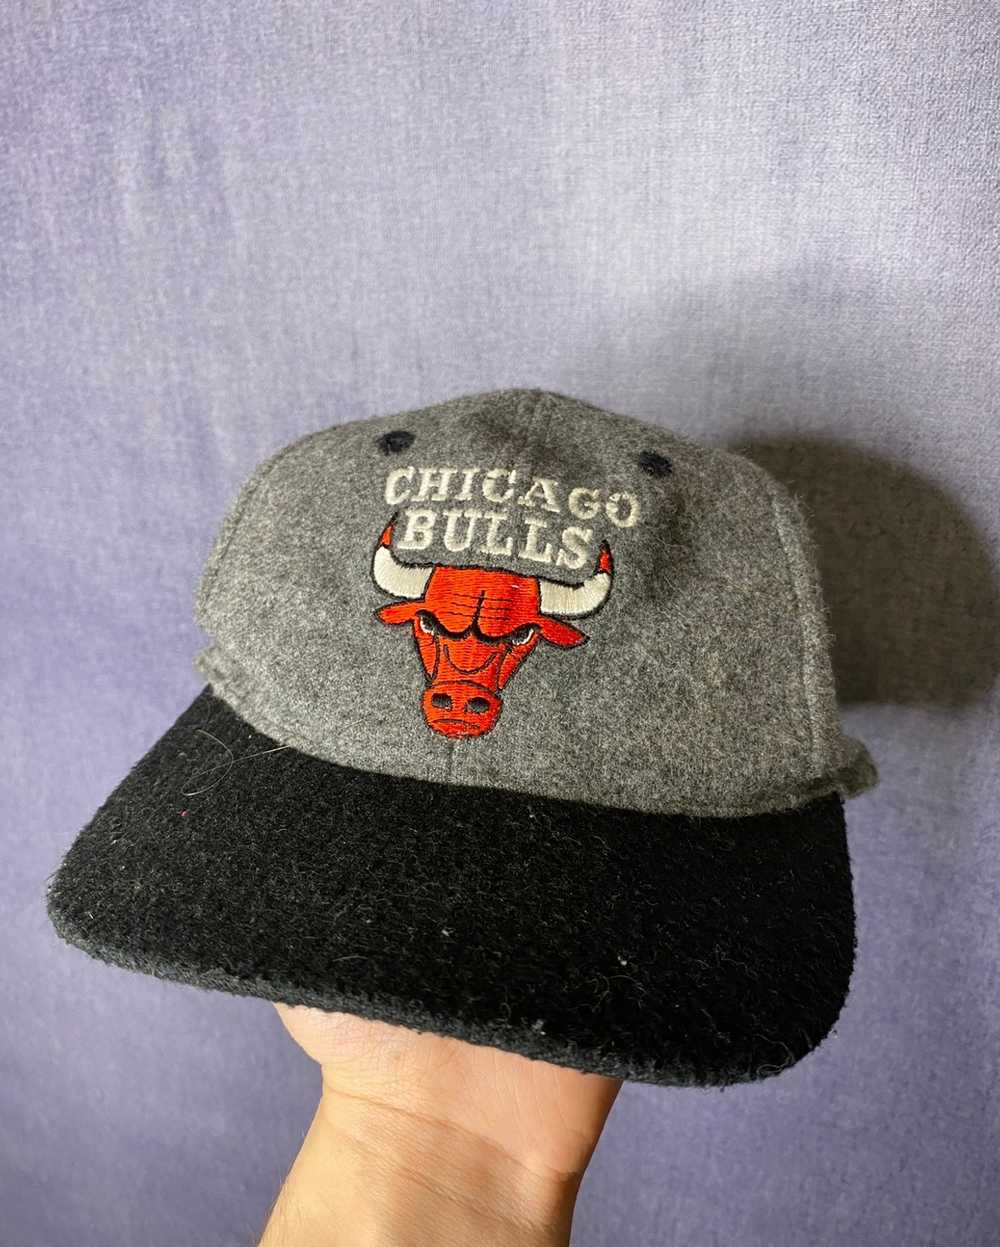 Vintage 1997 Chicago Bulls NBA Champions Snapback Hat… - Gem